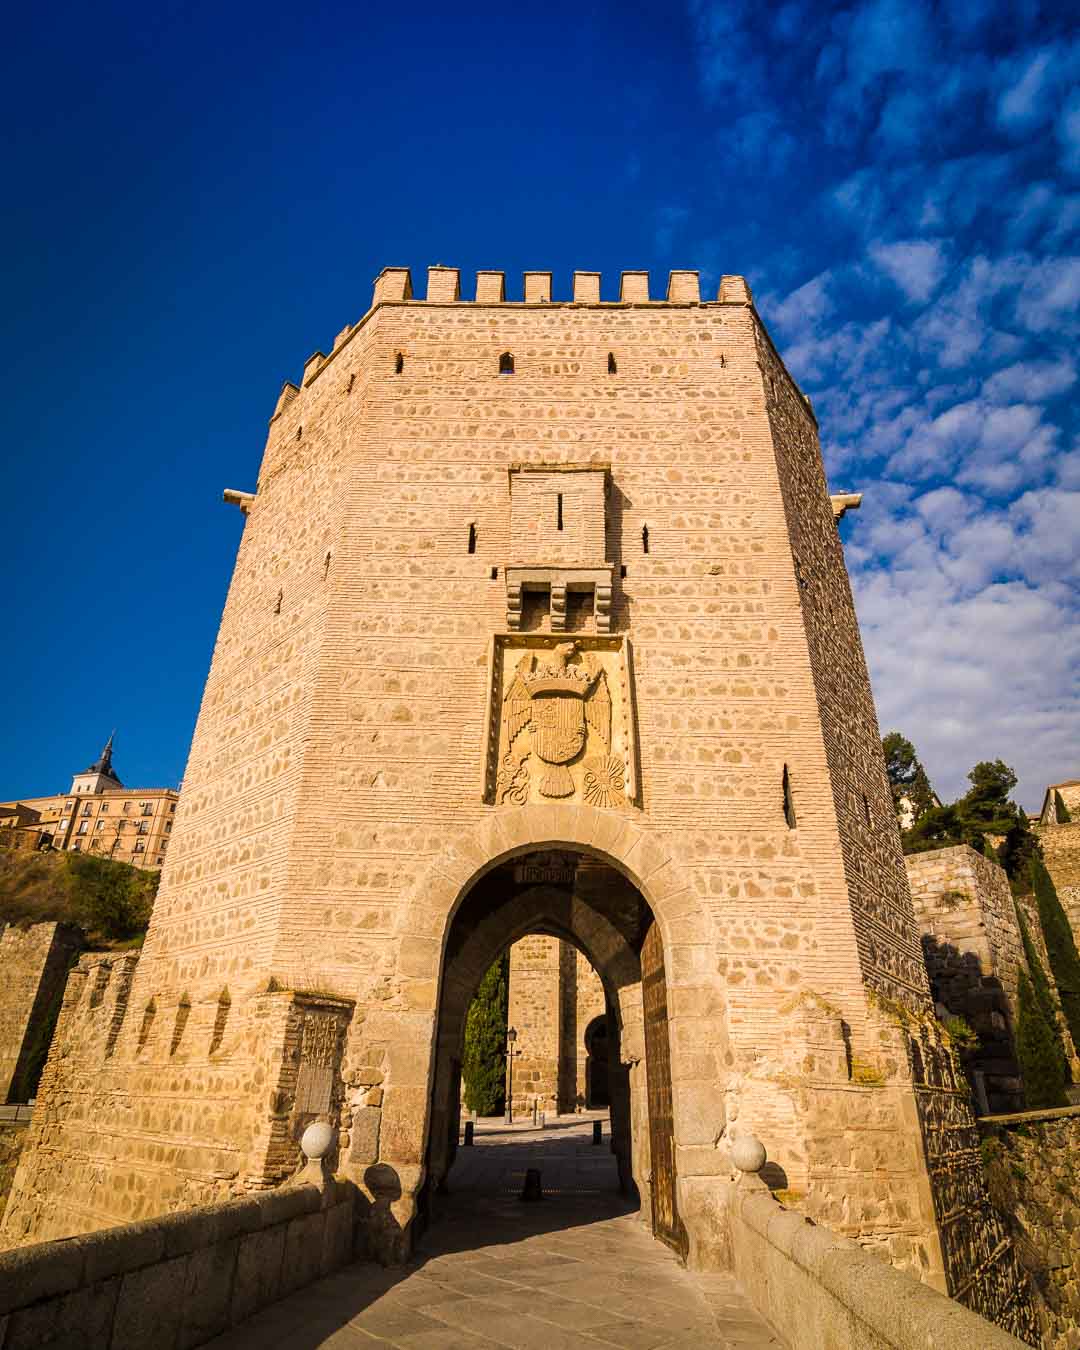 tower entrance to the city on the puente de alcantara